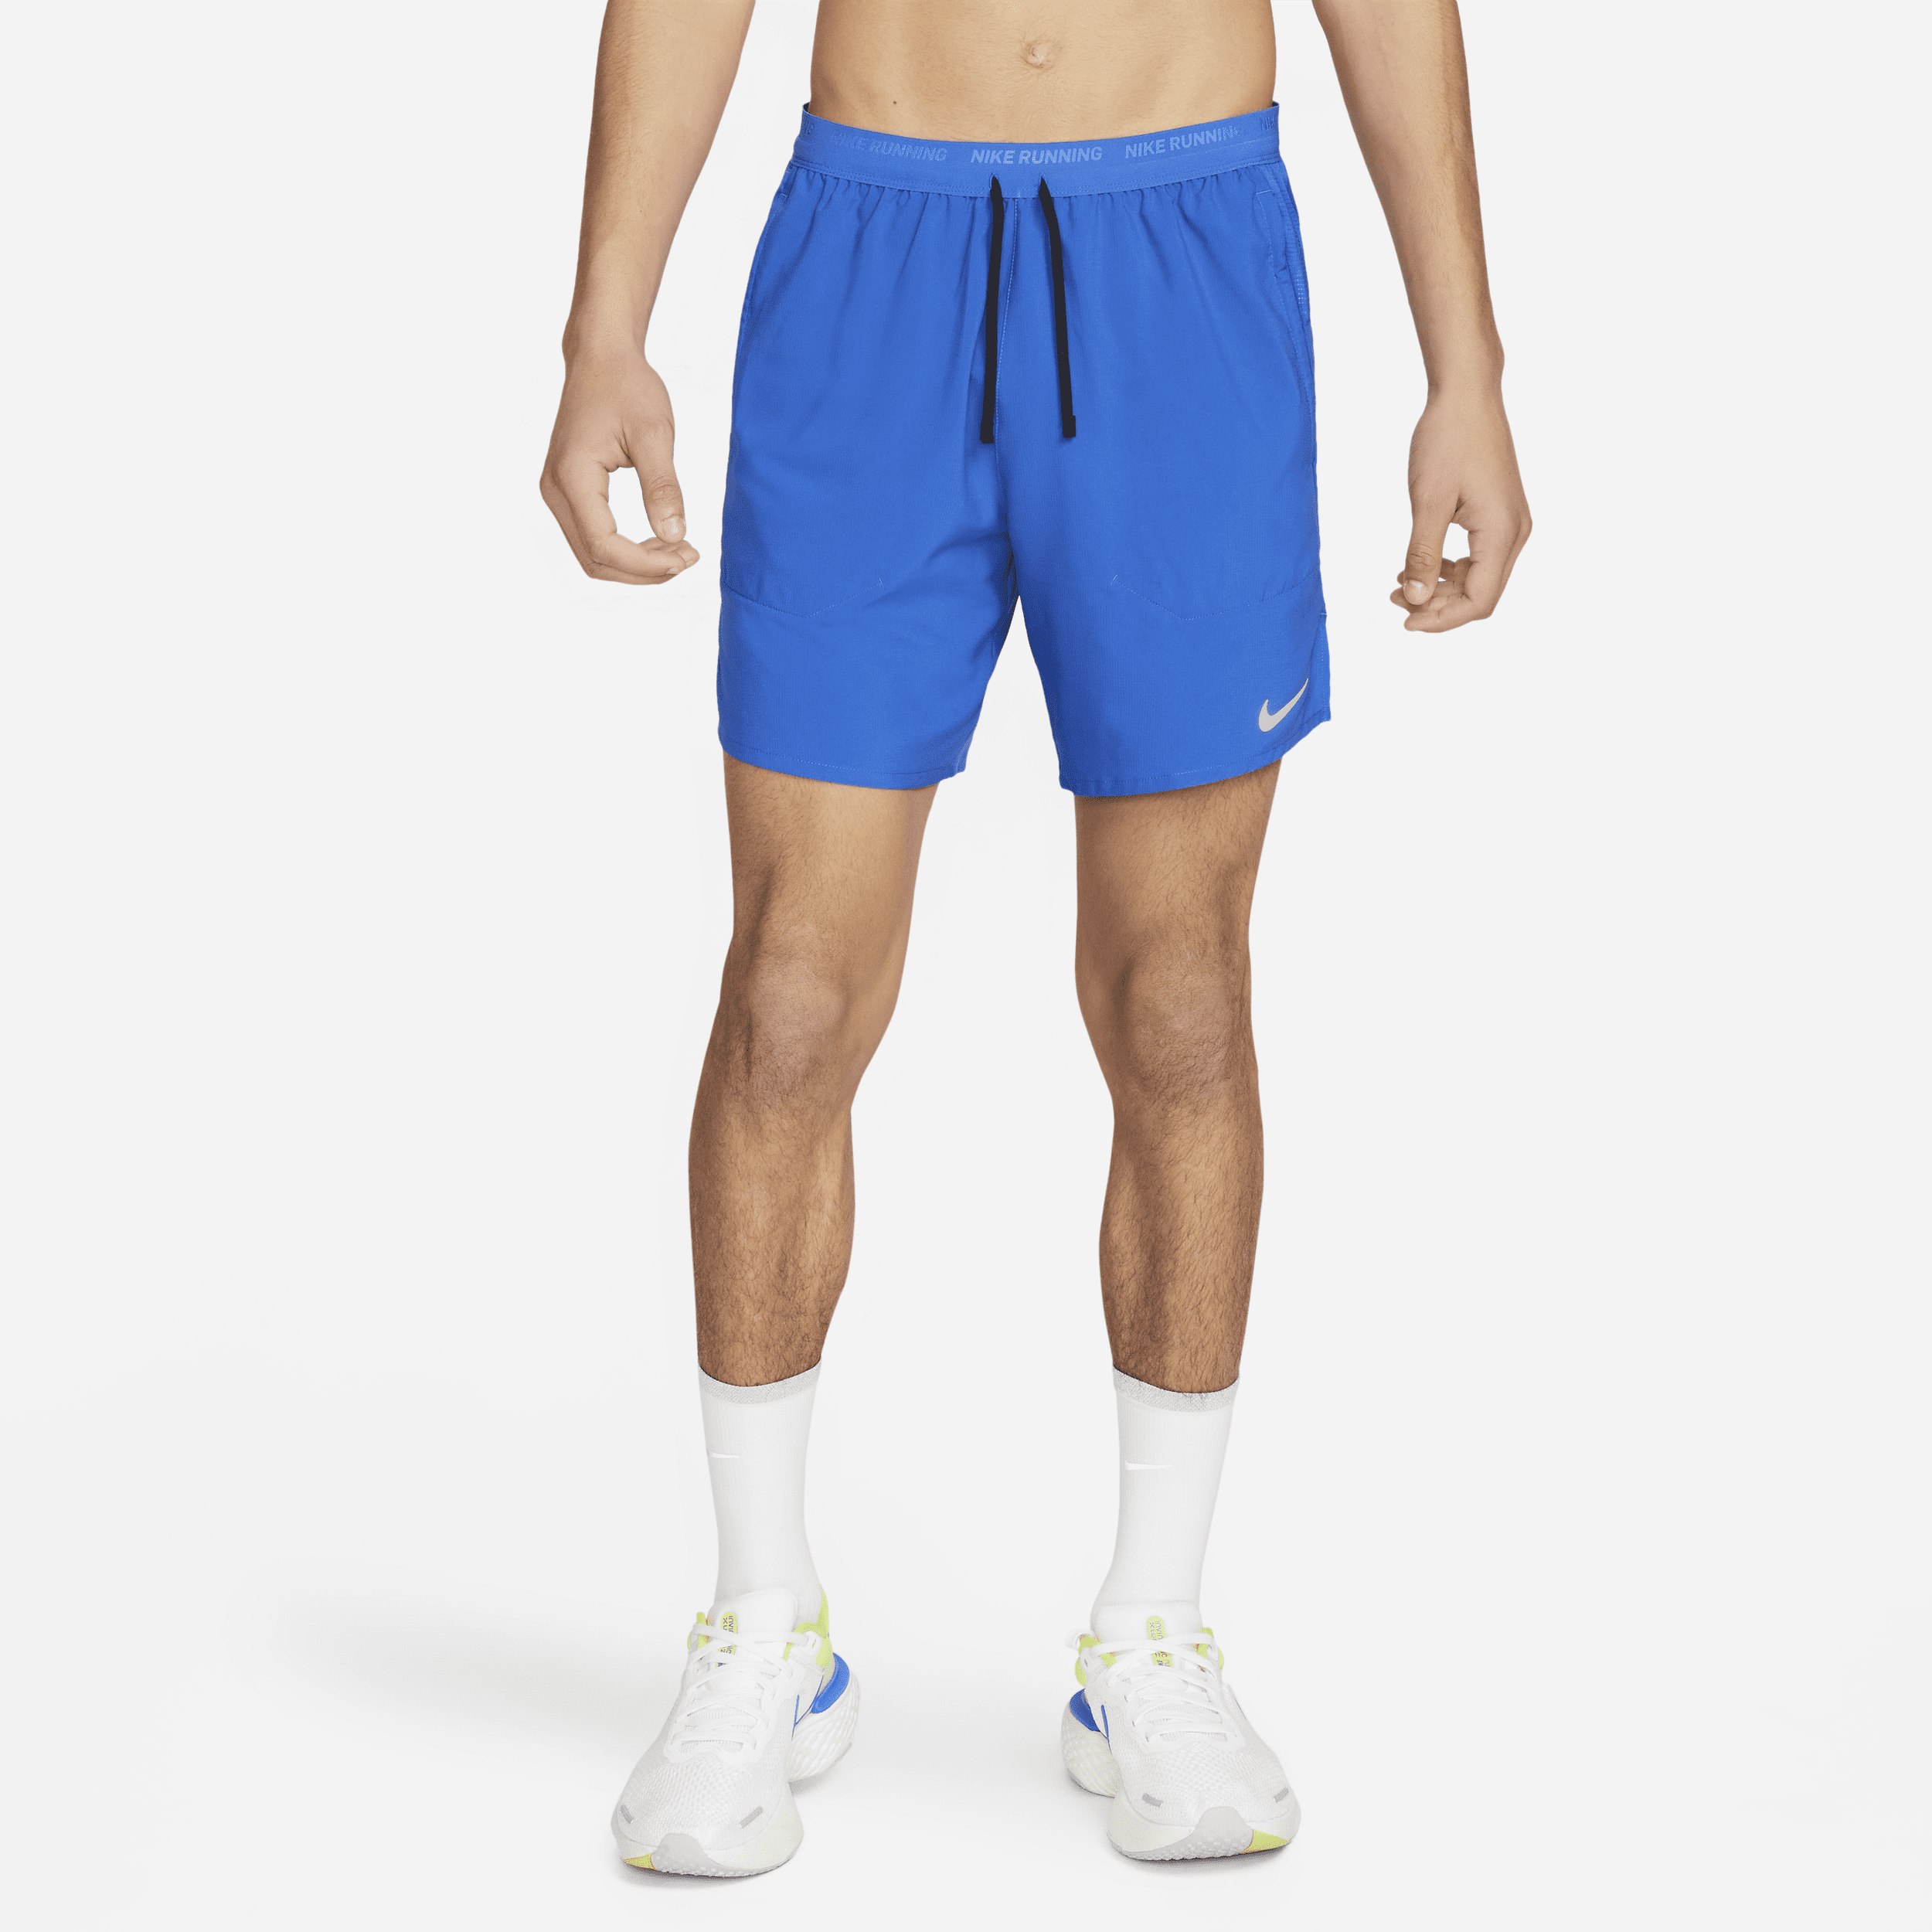 Nike Stride Dri-FIT 2-in-1 hardloopshorts voor heren (18 cm) - Blauw